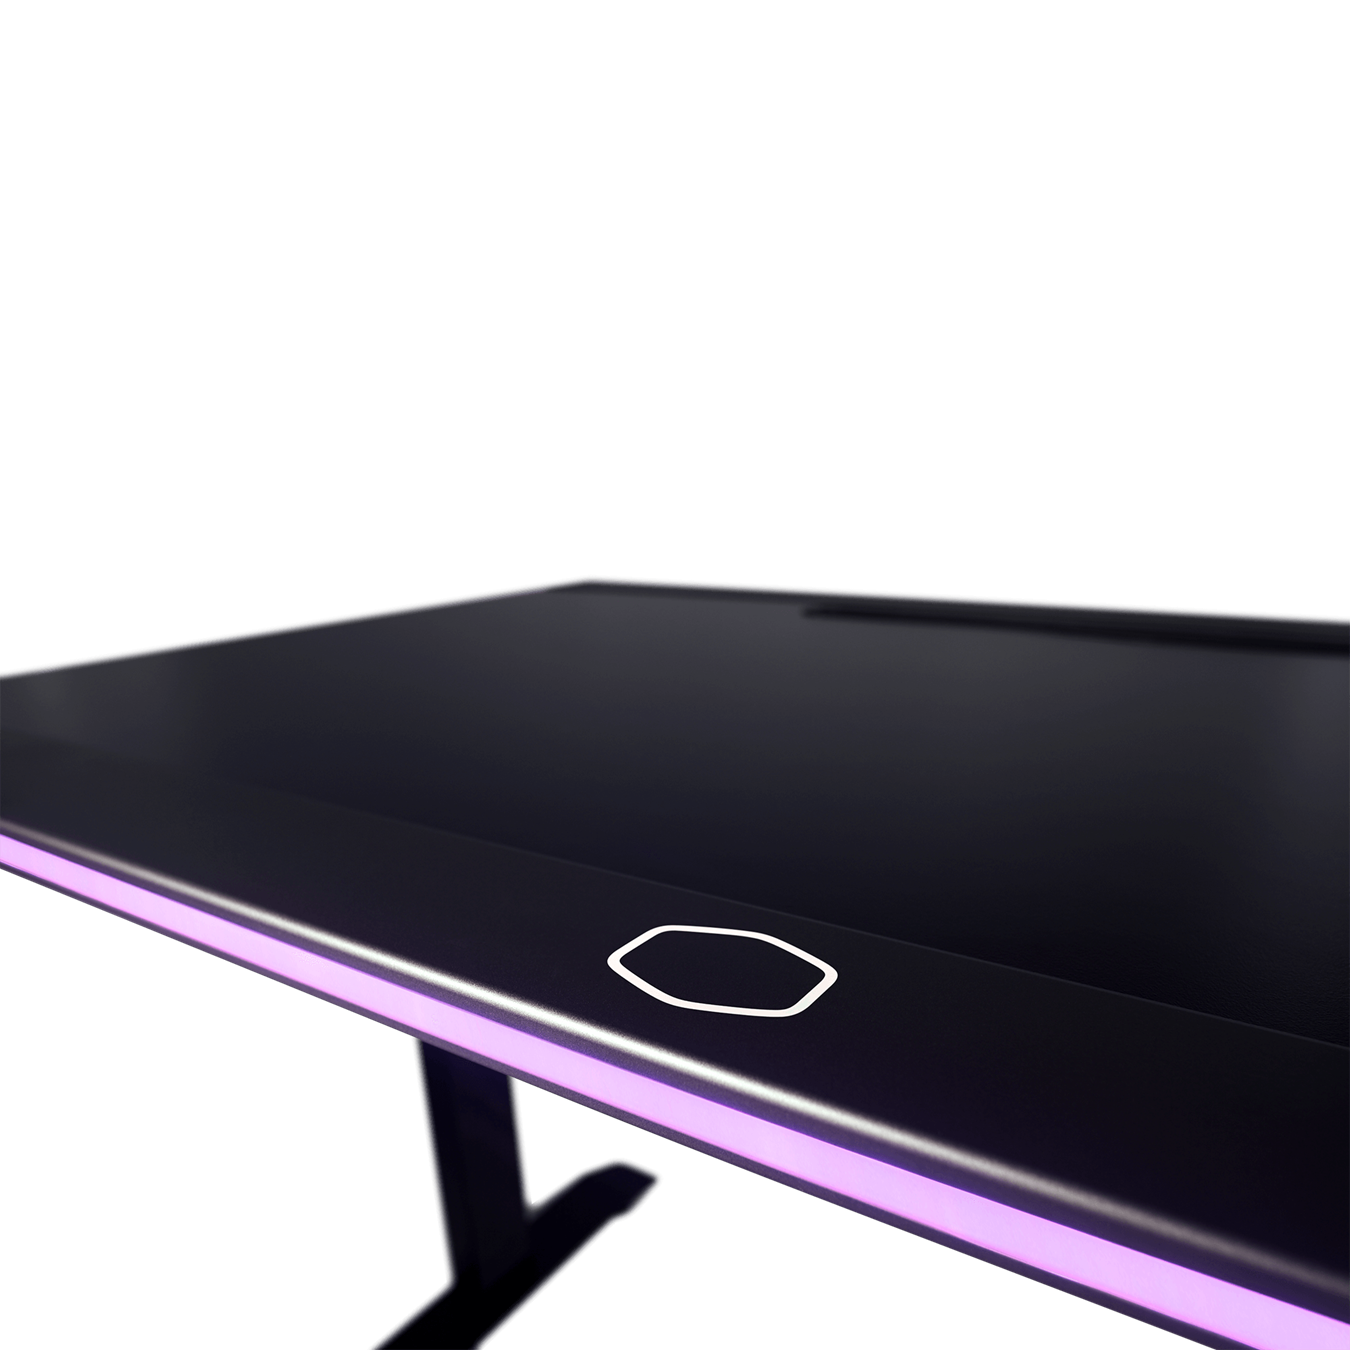 GD120 ARGB Gaming Desk - Close up shot 02 with purple LED lights